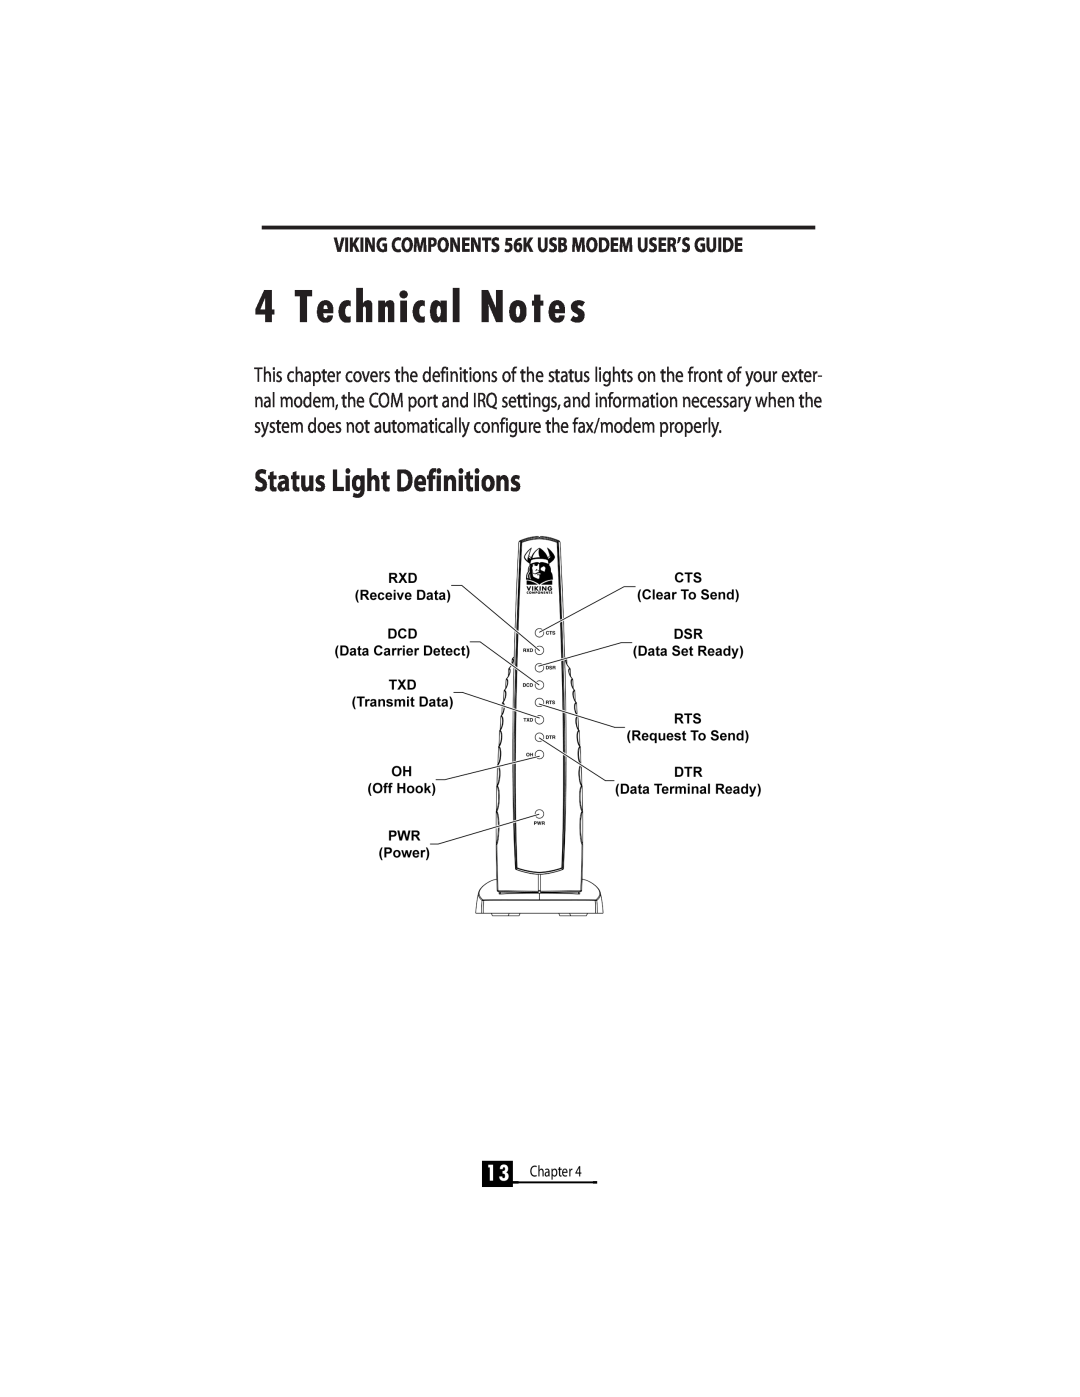 Viking InterWorks 56K manual Technical Notes, Status Light Definitions 